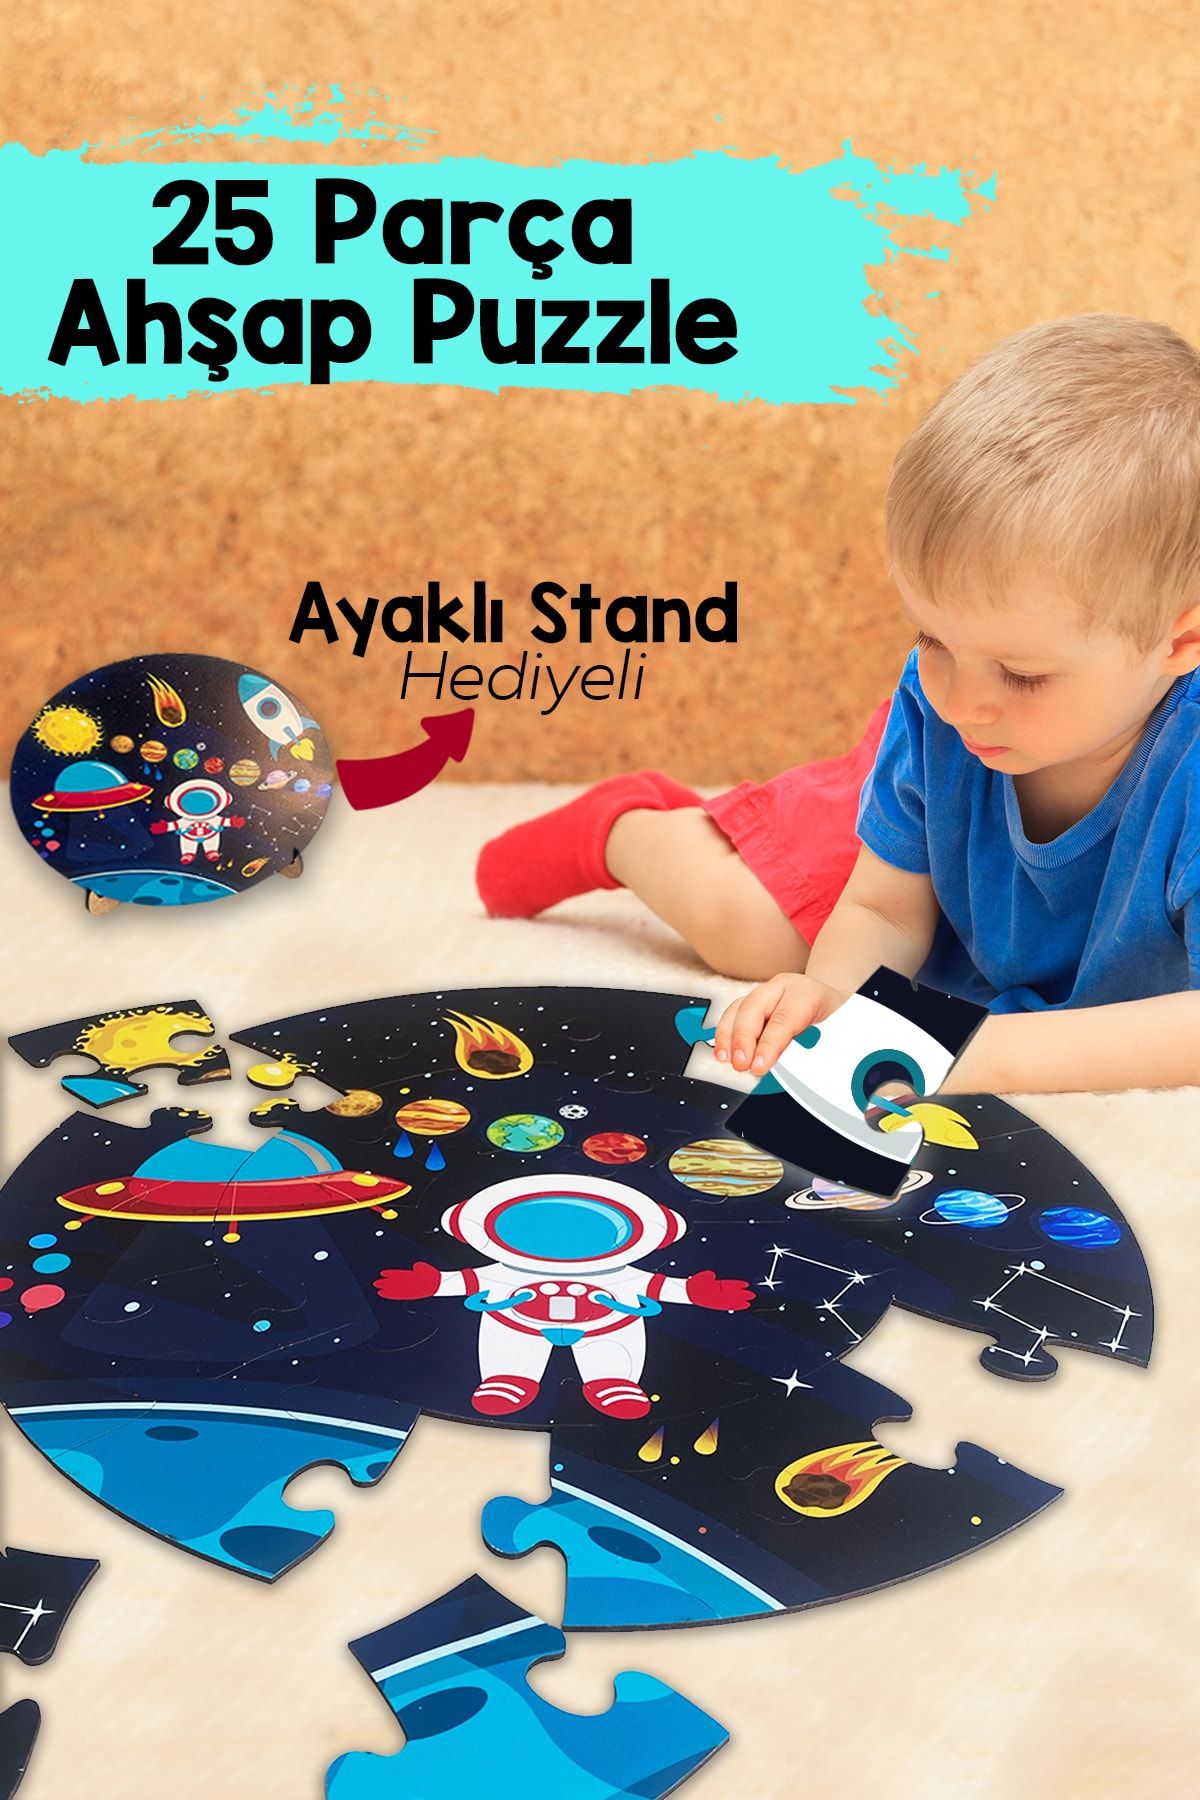 Little One Ahşap Gezegen Puzzle 42cm, Mega Boy Renkli Uzay Bebek, Çocuk Ve Okul Öncesi Için Puzzle